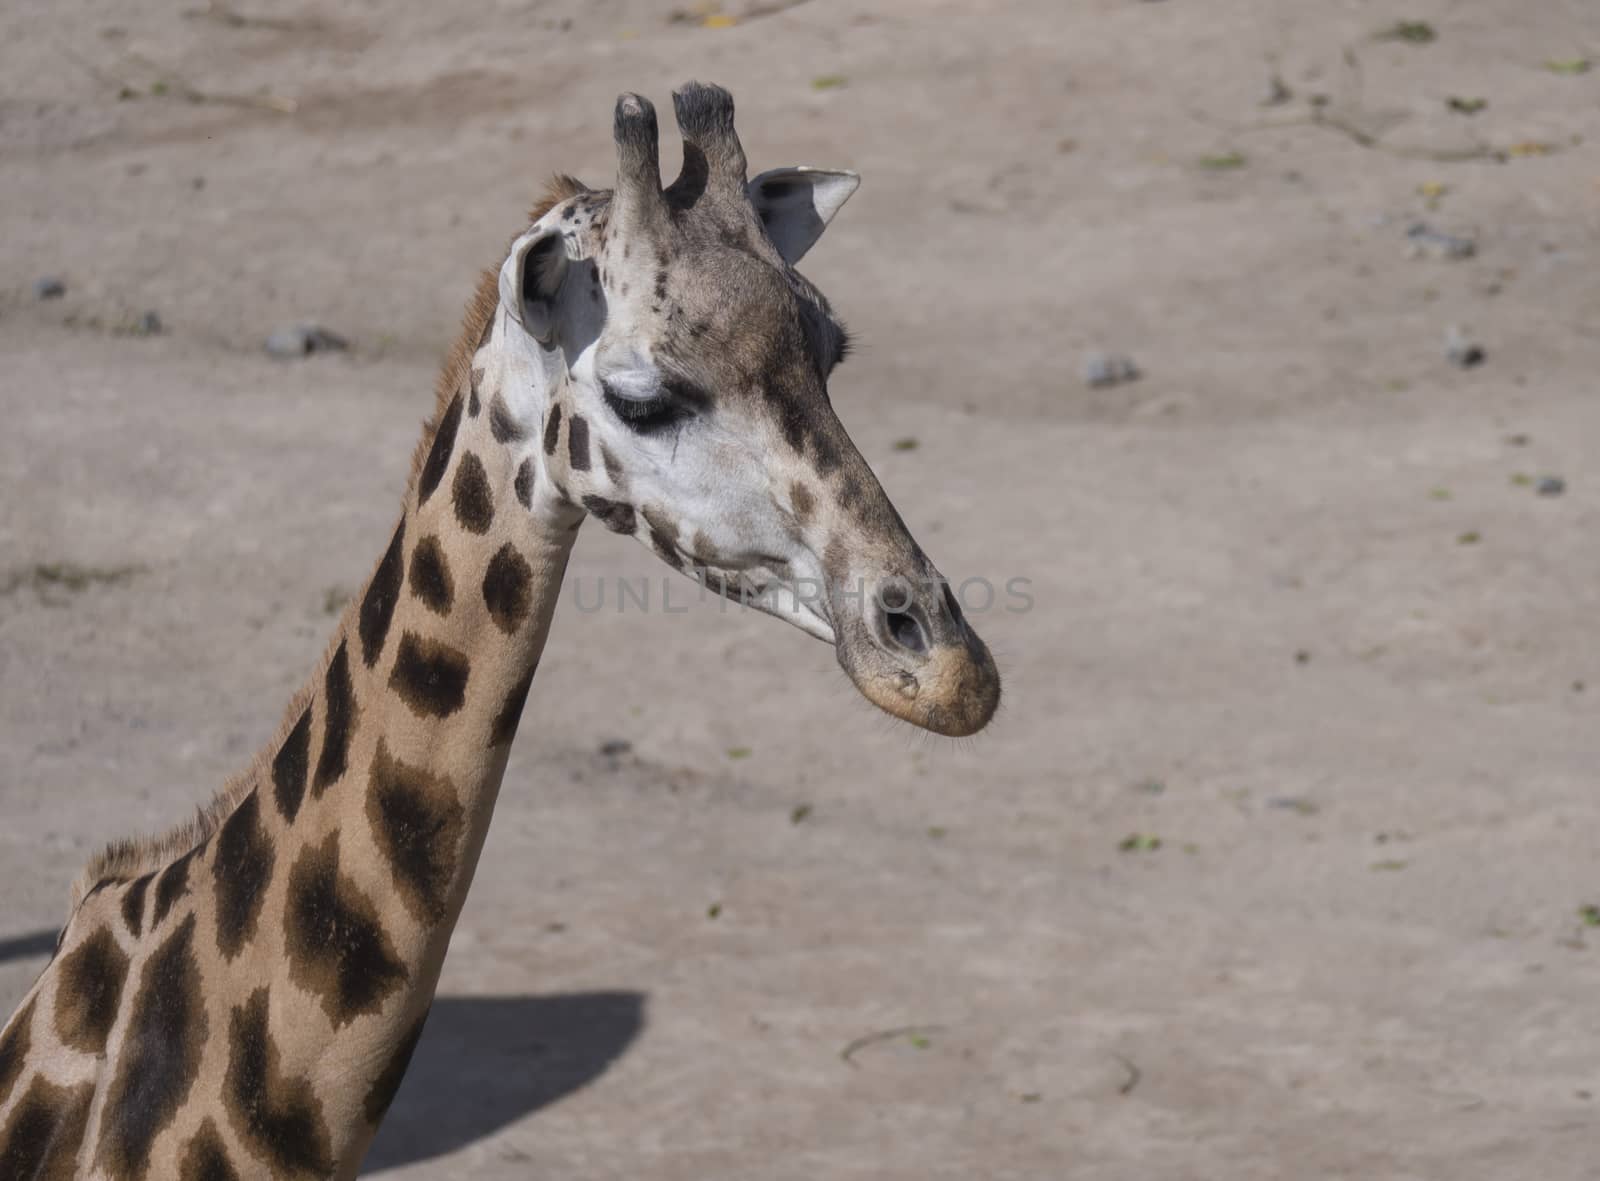 Close up portrait of giraffe head, Giraffa camelopardalis camelopardalis Linnaeus, profile view, beige bokeh background by Henkeova